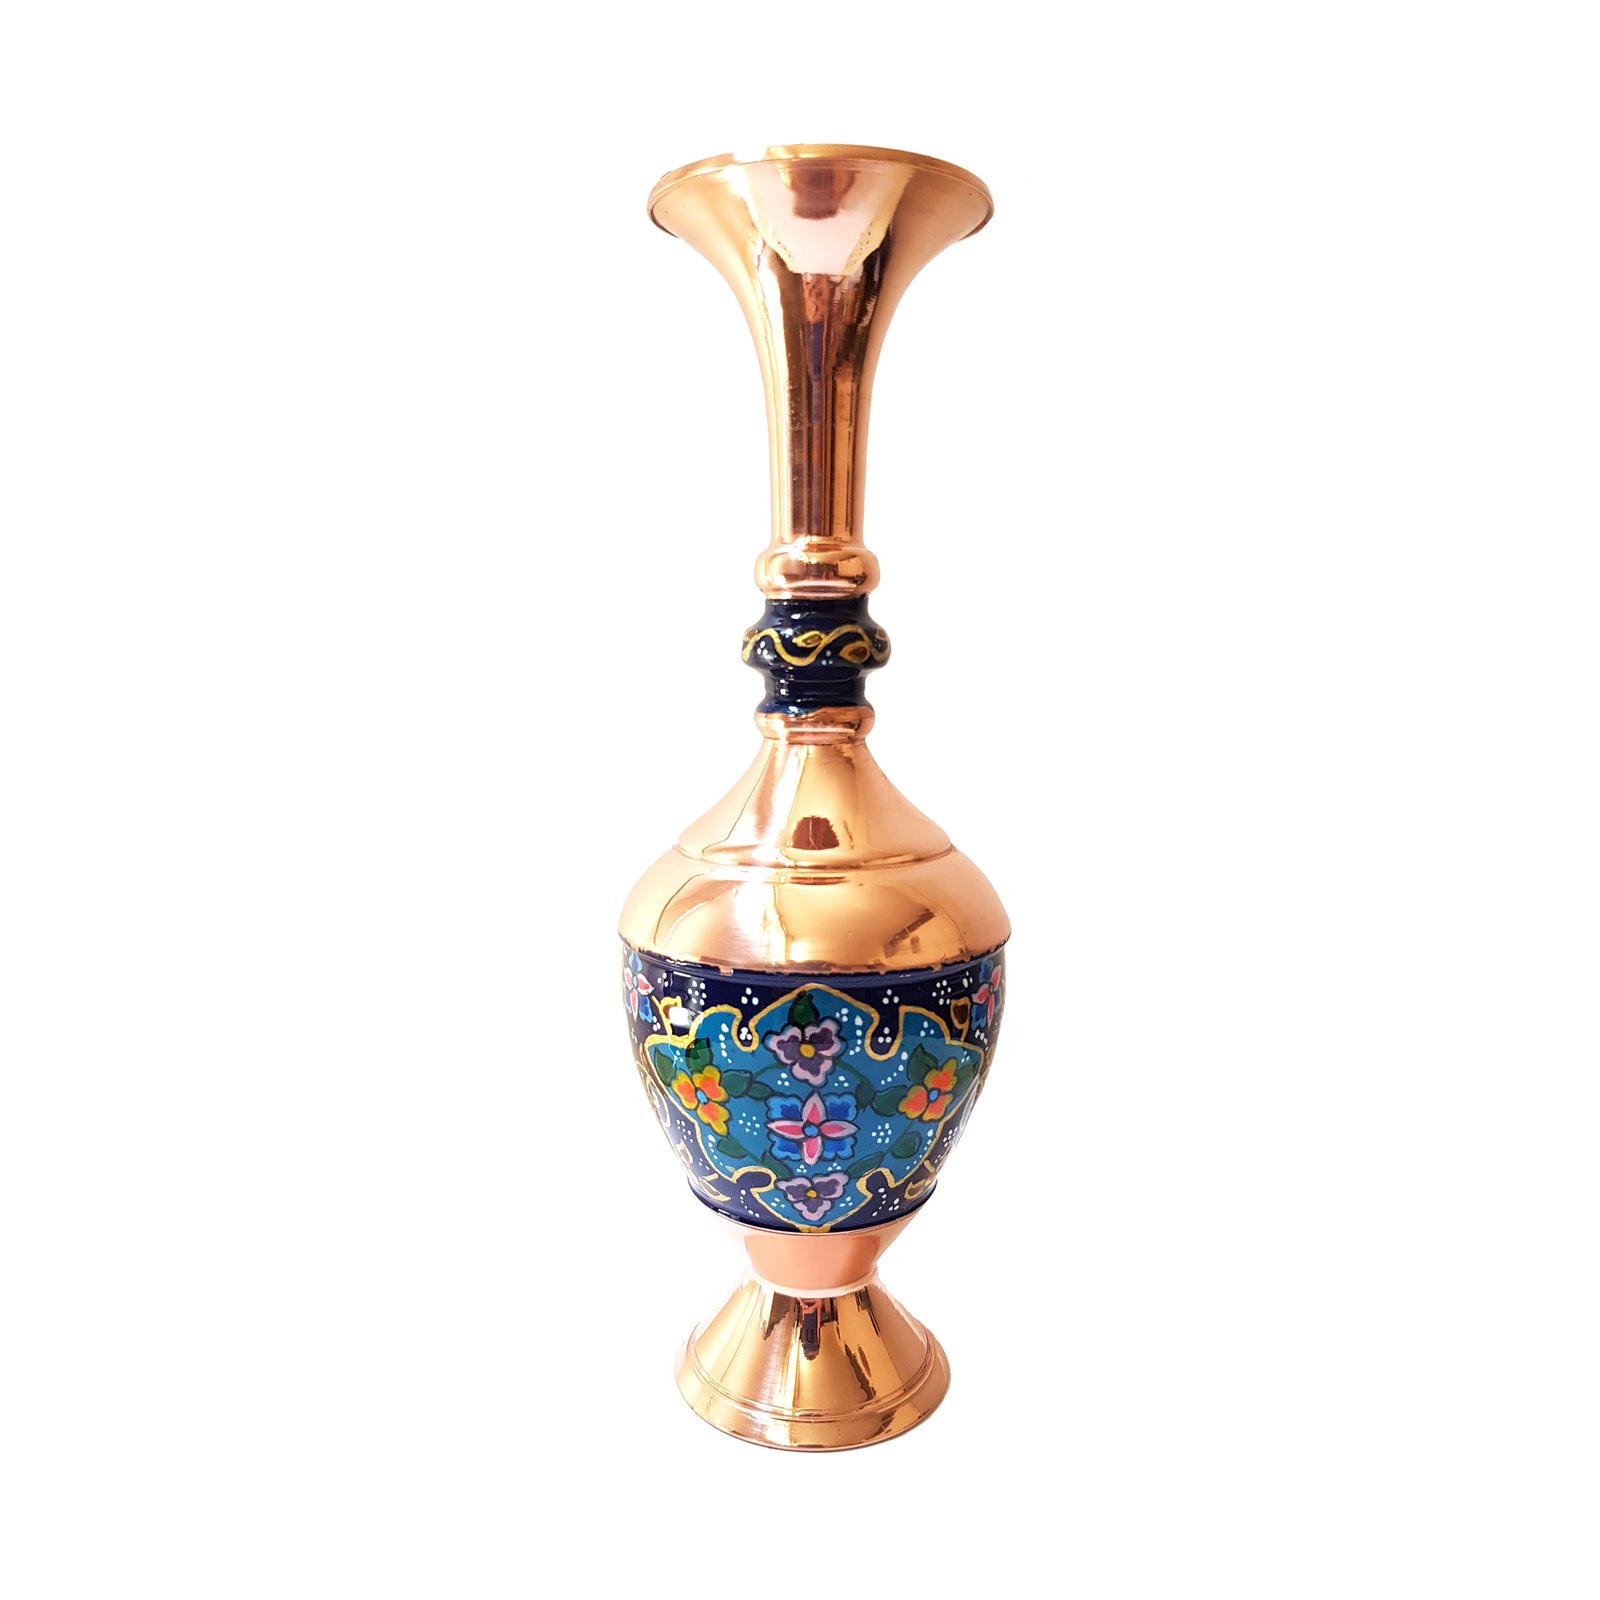 Enamel Handicraft Copper pot model naghashi pardaz Code 201, ollas hechas a mano, tarros hechos a mano, esmalte hecho a mano, esmalte azul hecho a mano